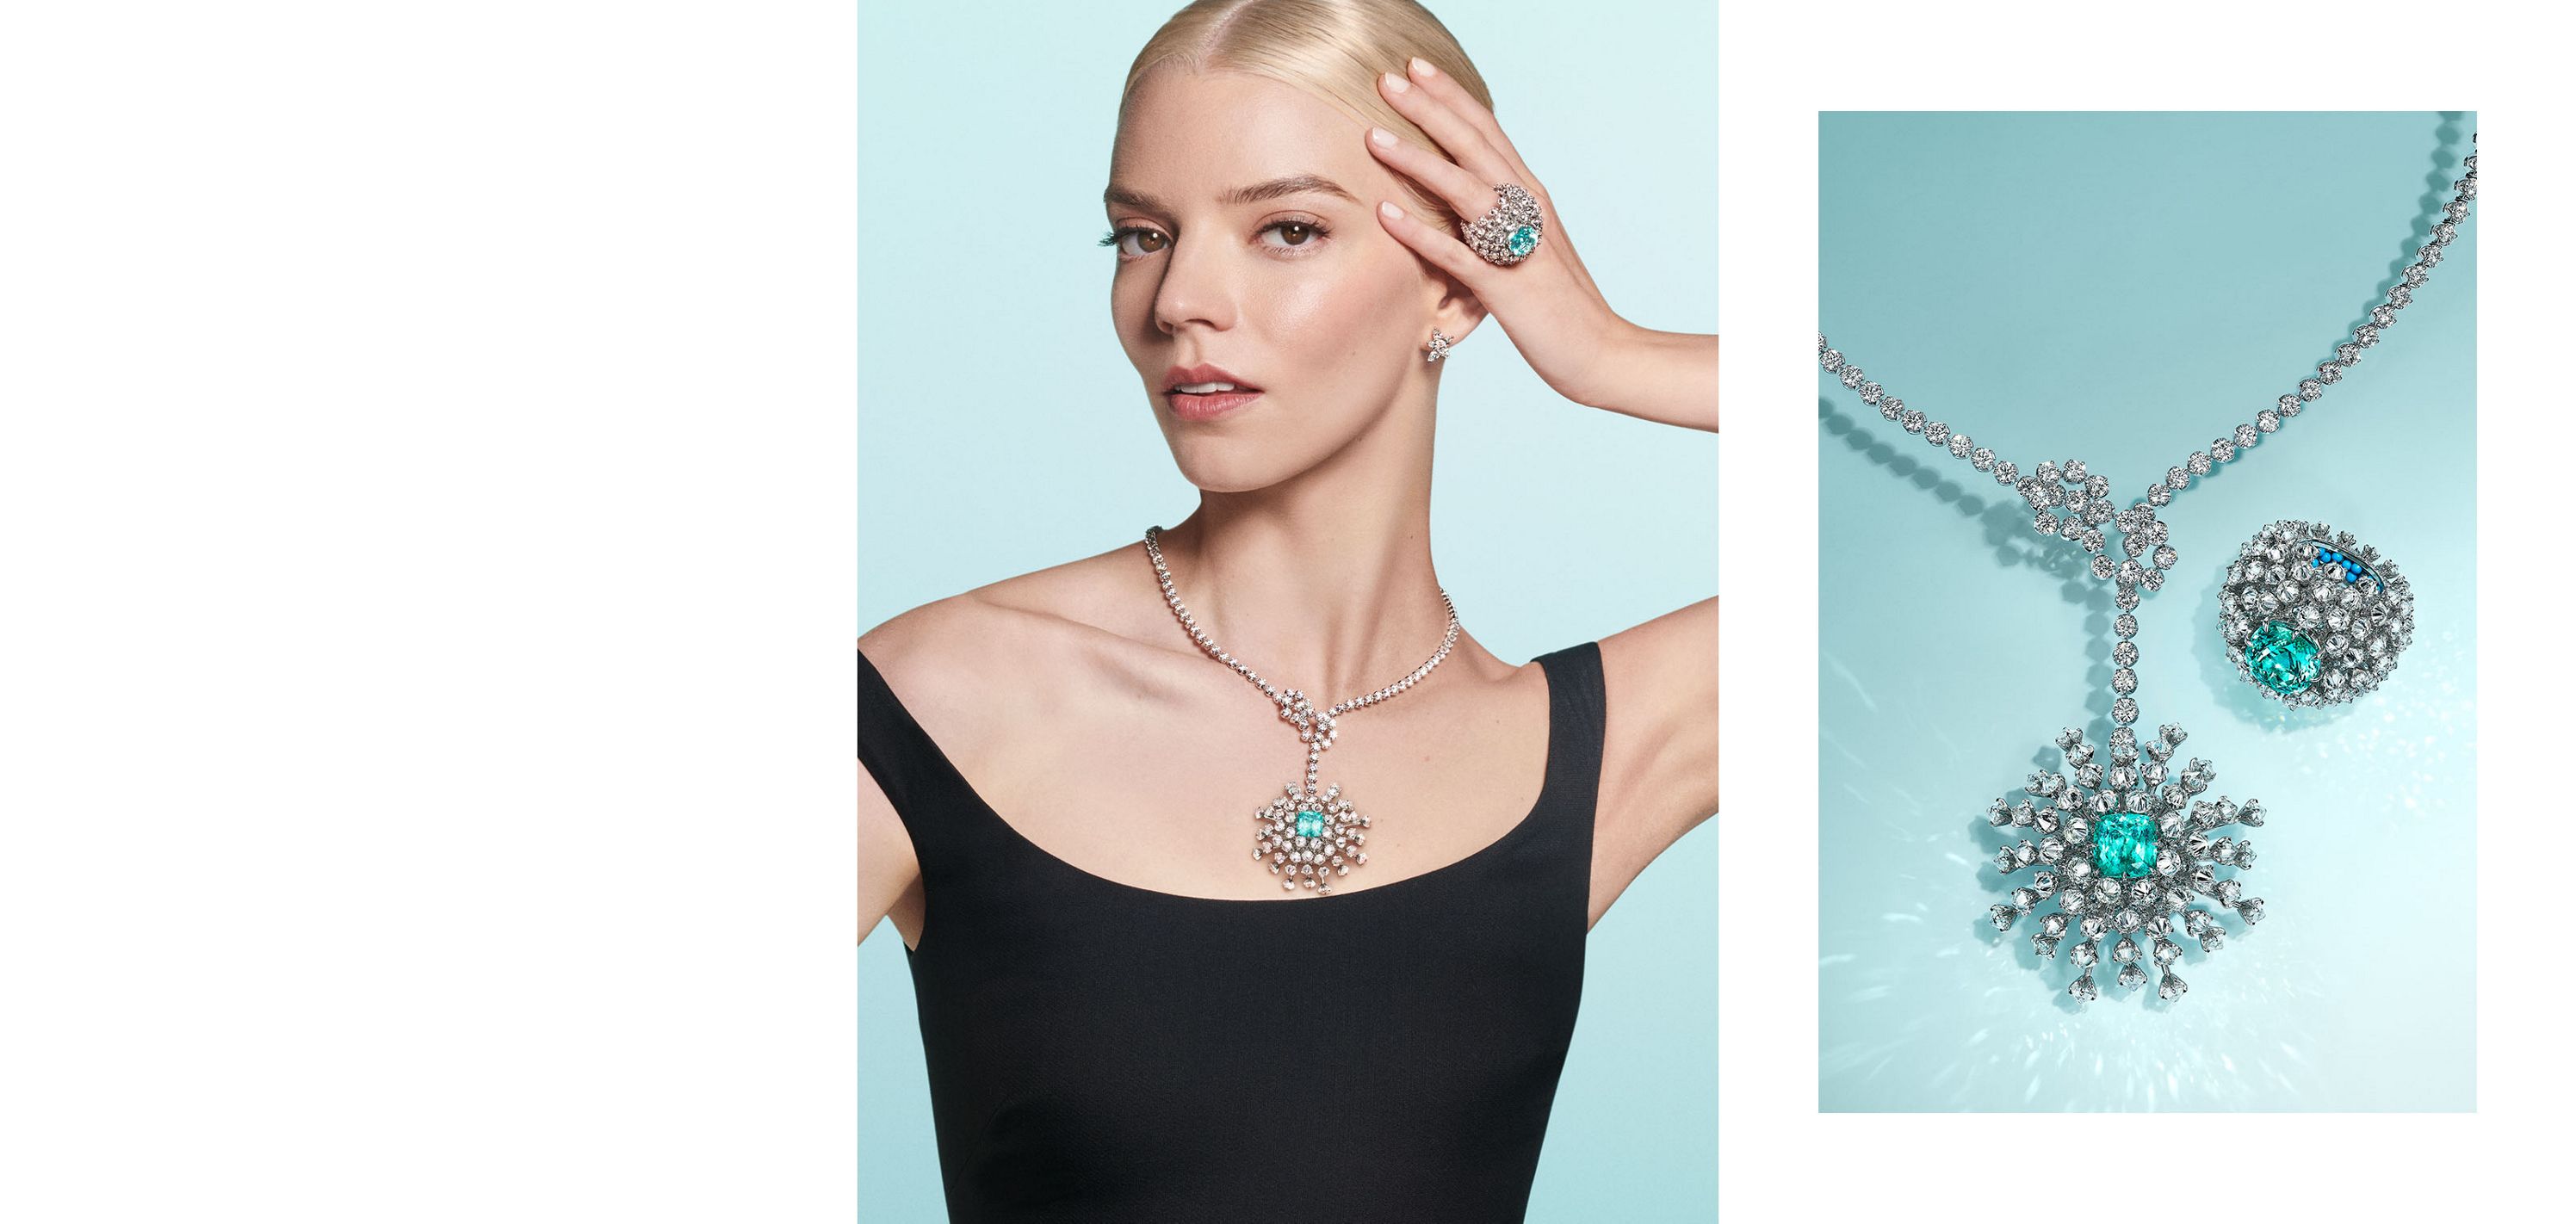 Tiffany & Co. Diamond Sterling Silver Fine Necklaces & Pendants